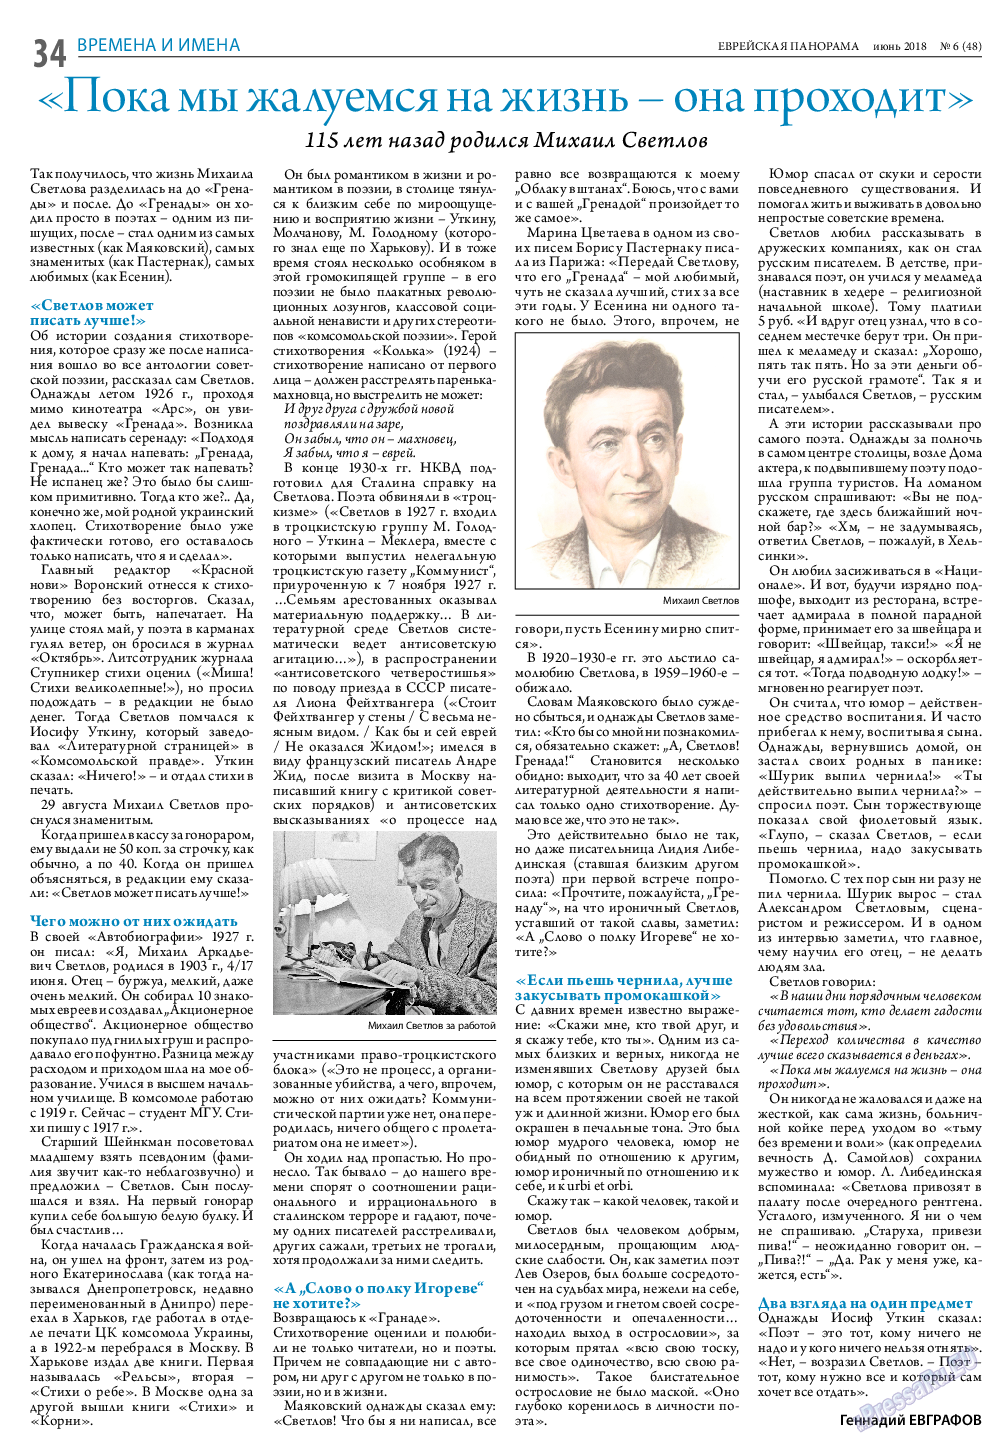 Еврейская панорама, газета. 2018 №6 стр.34